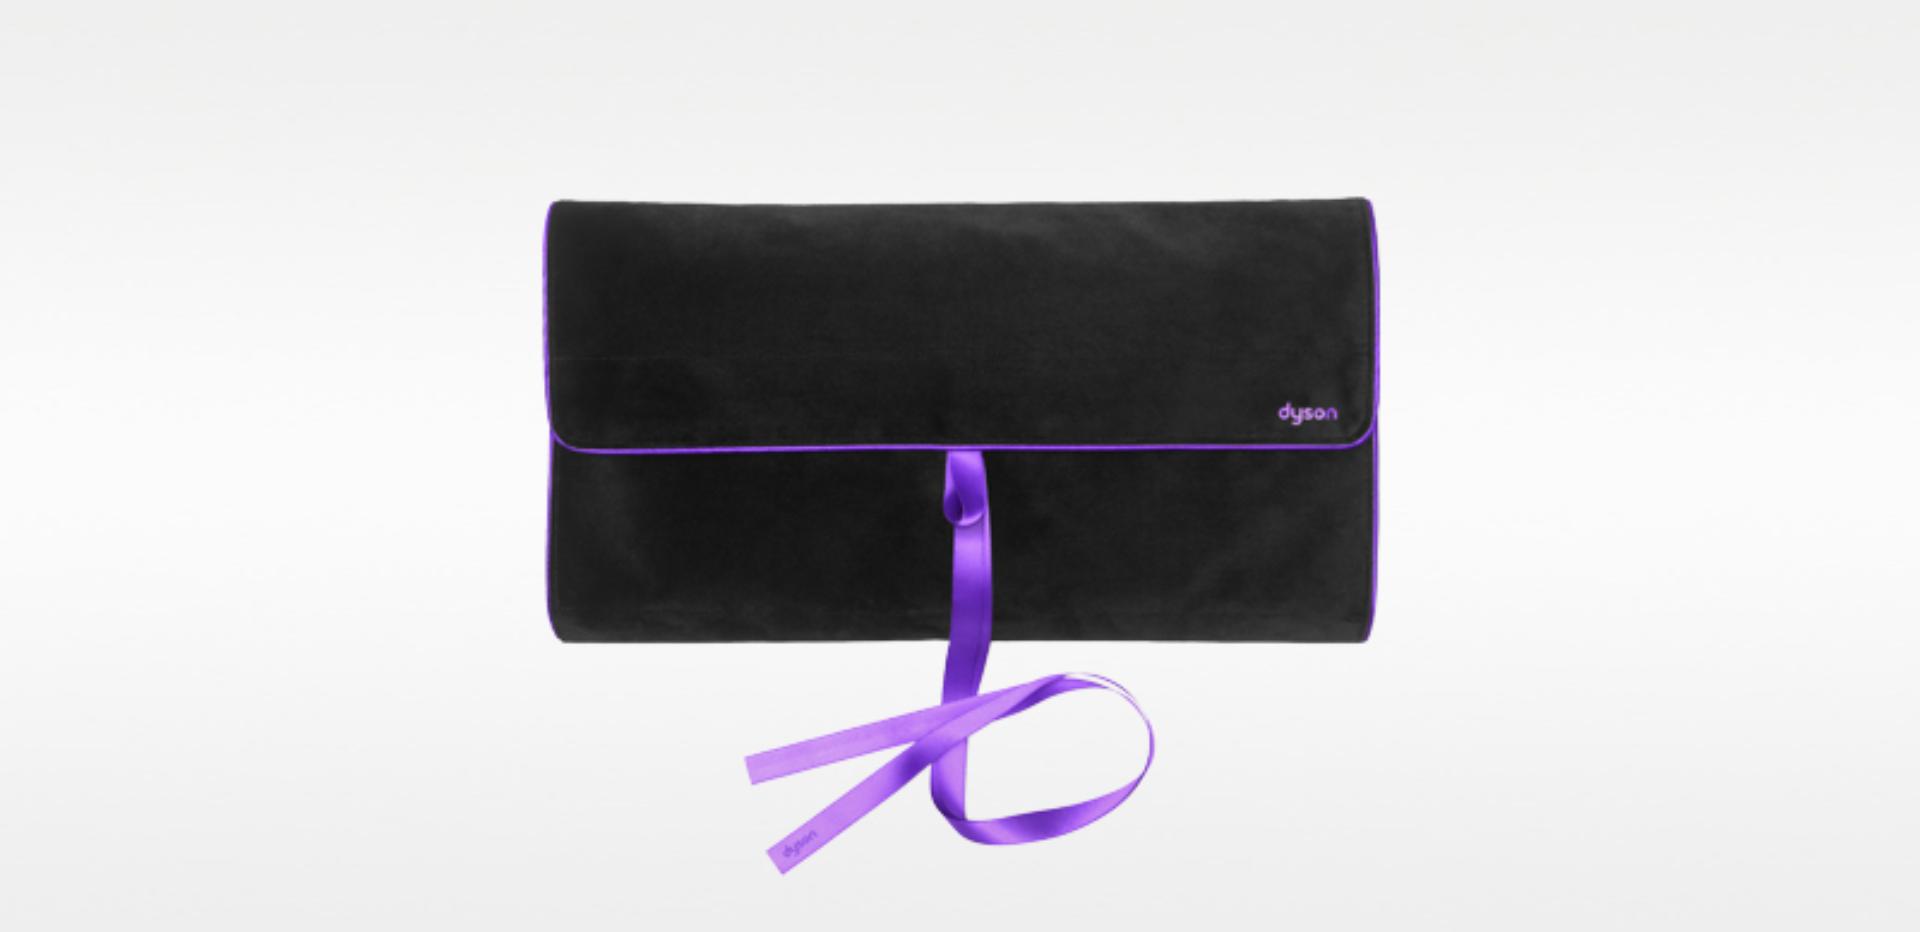 Black and purple Dyson-designed storage bag